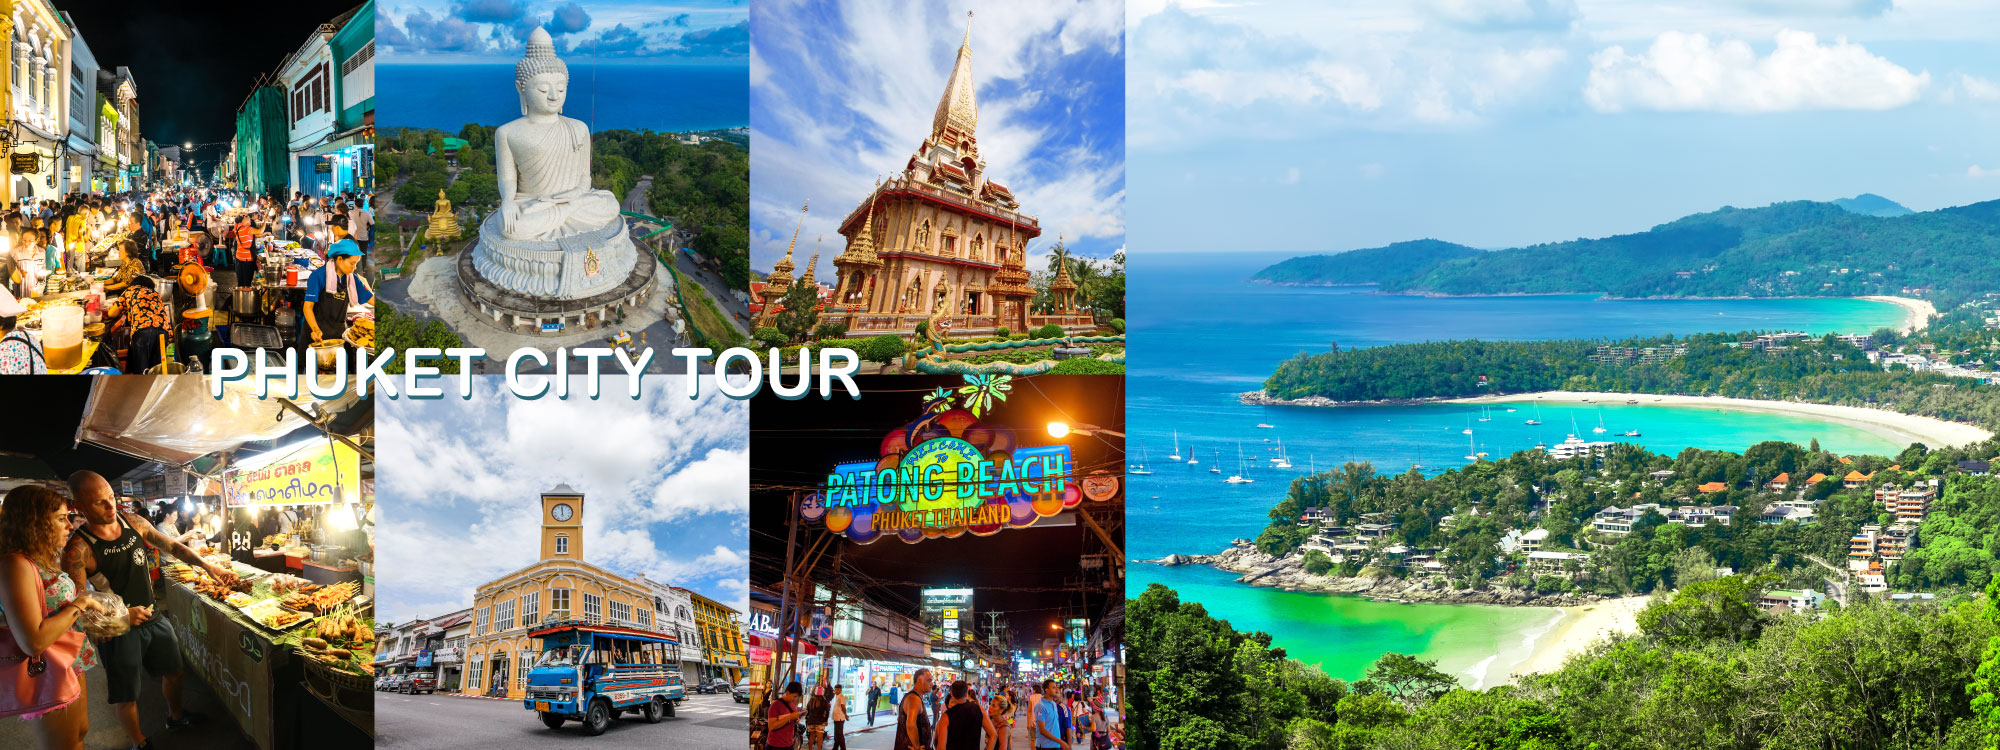 Phuket City Tour Package